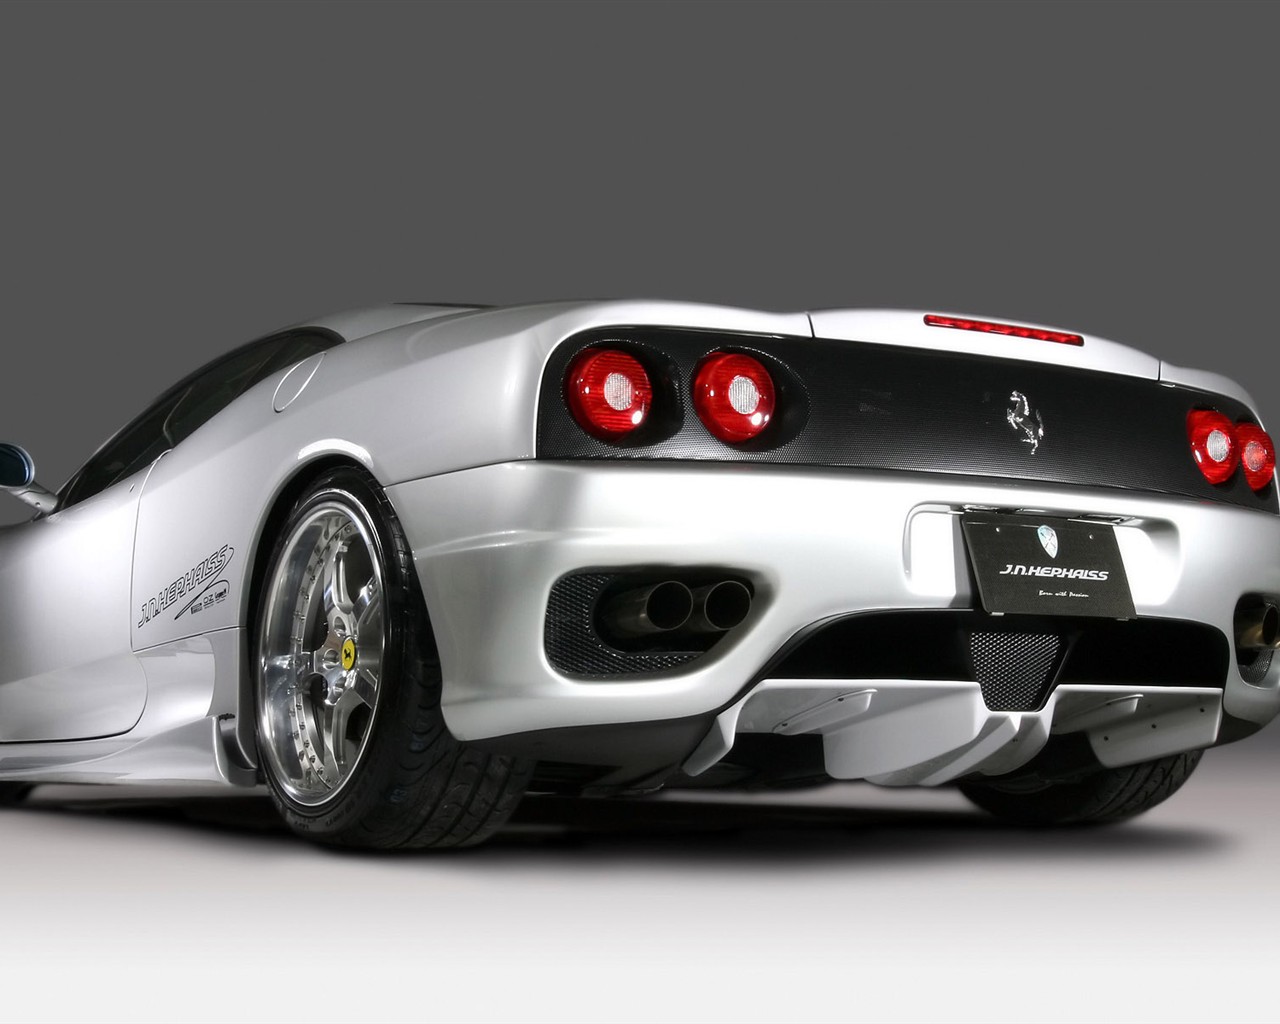 White Ferrari F430 Wallpaper HD In Cars Imageci